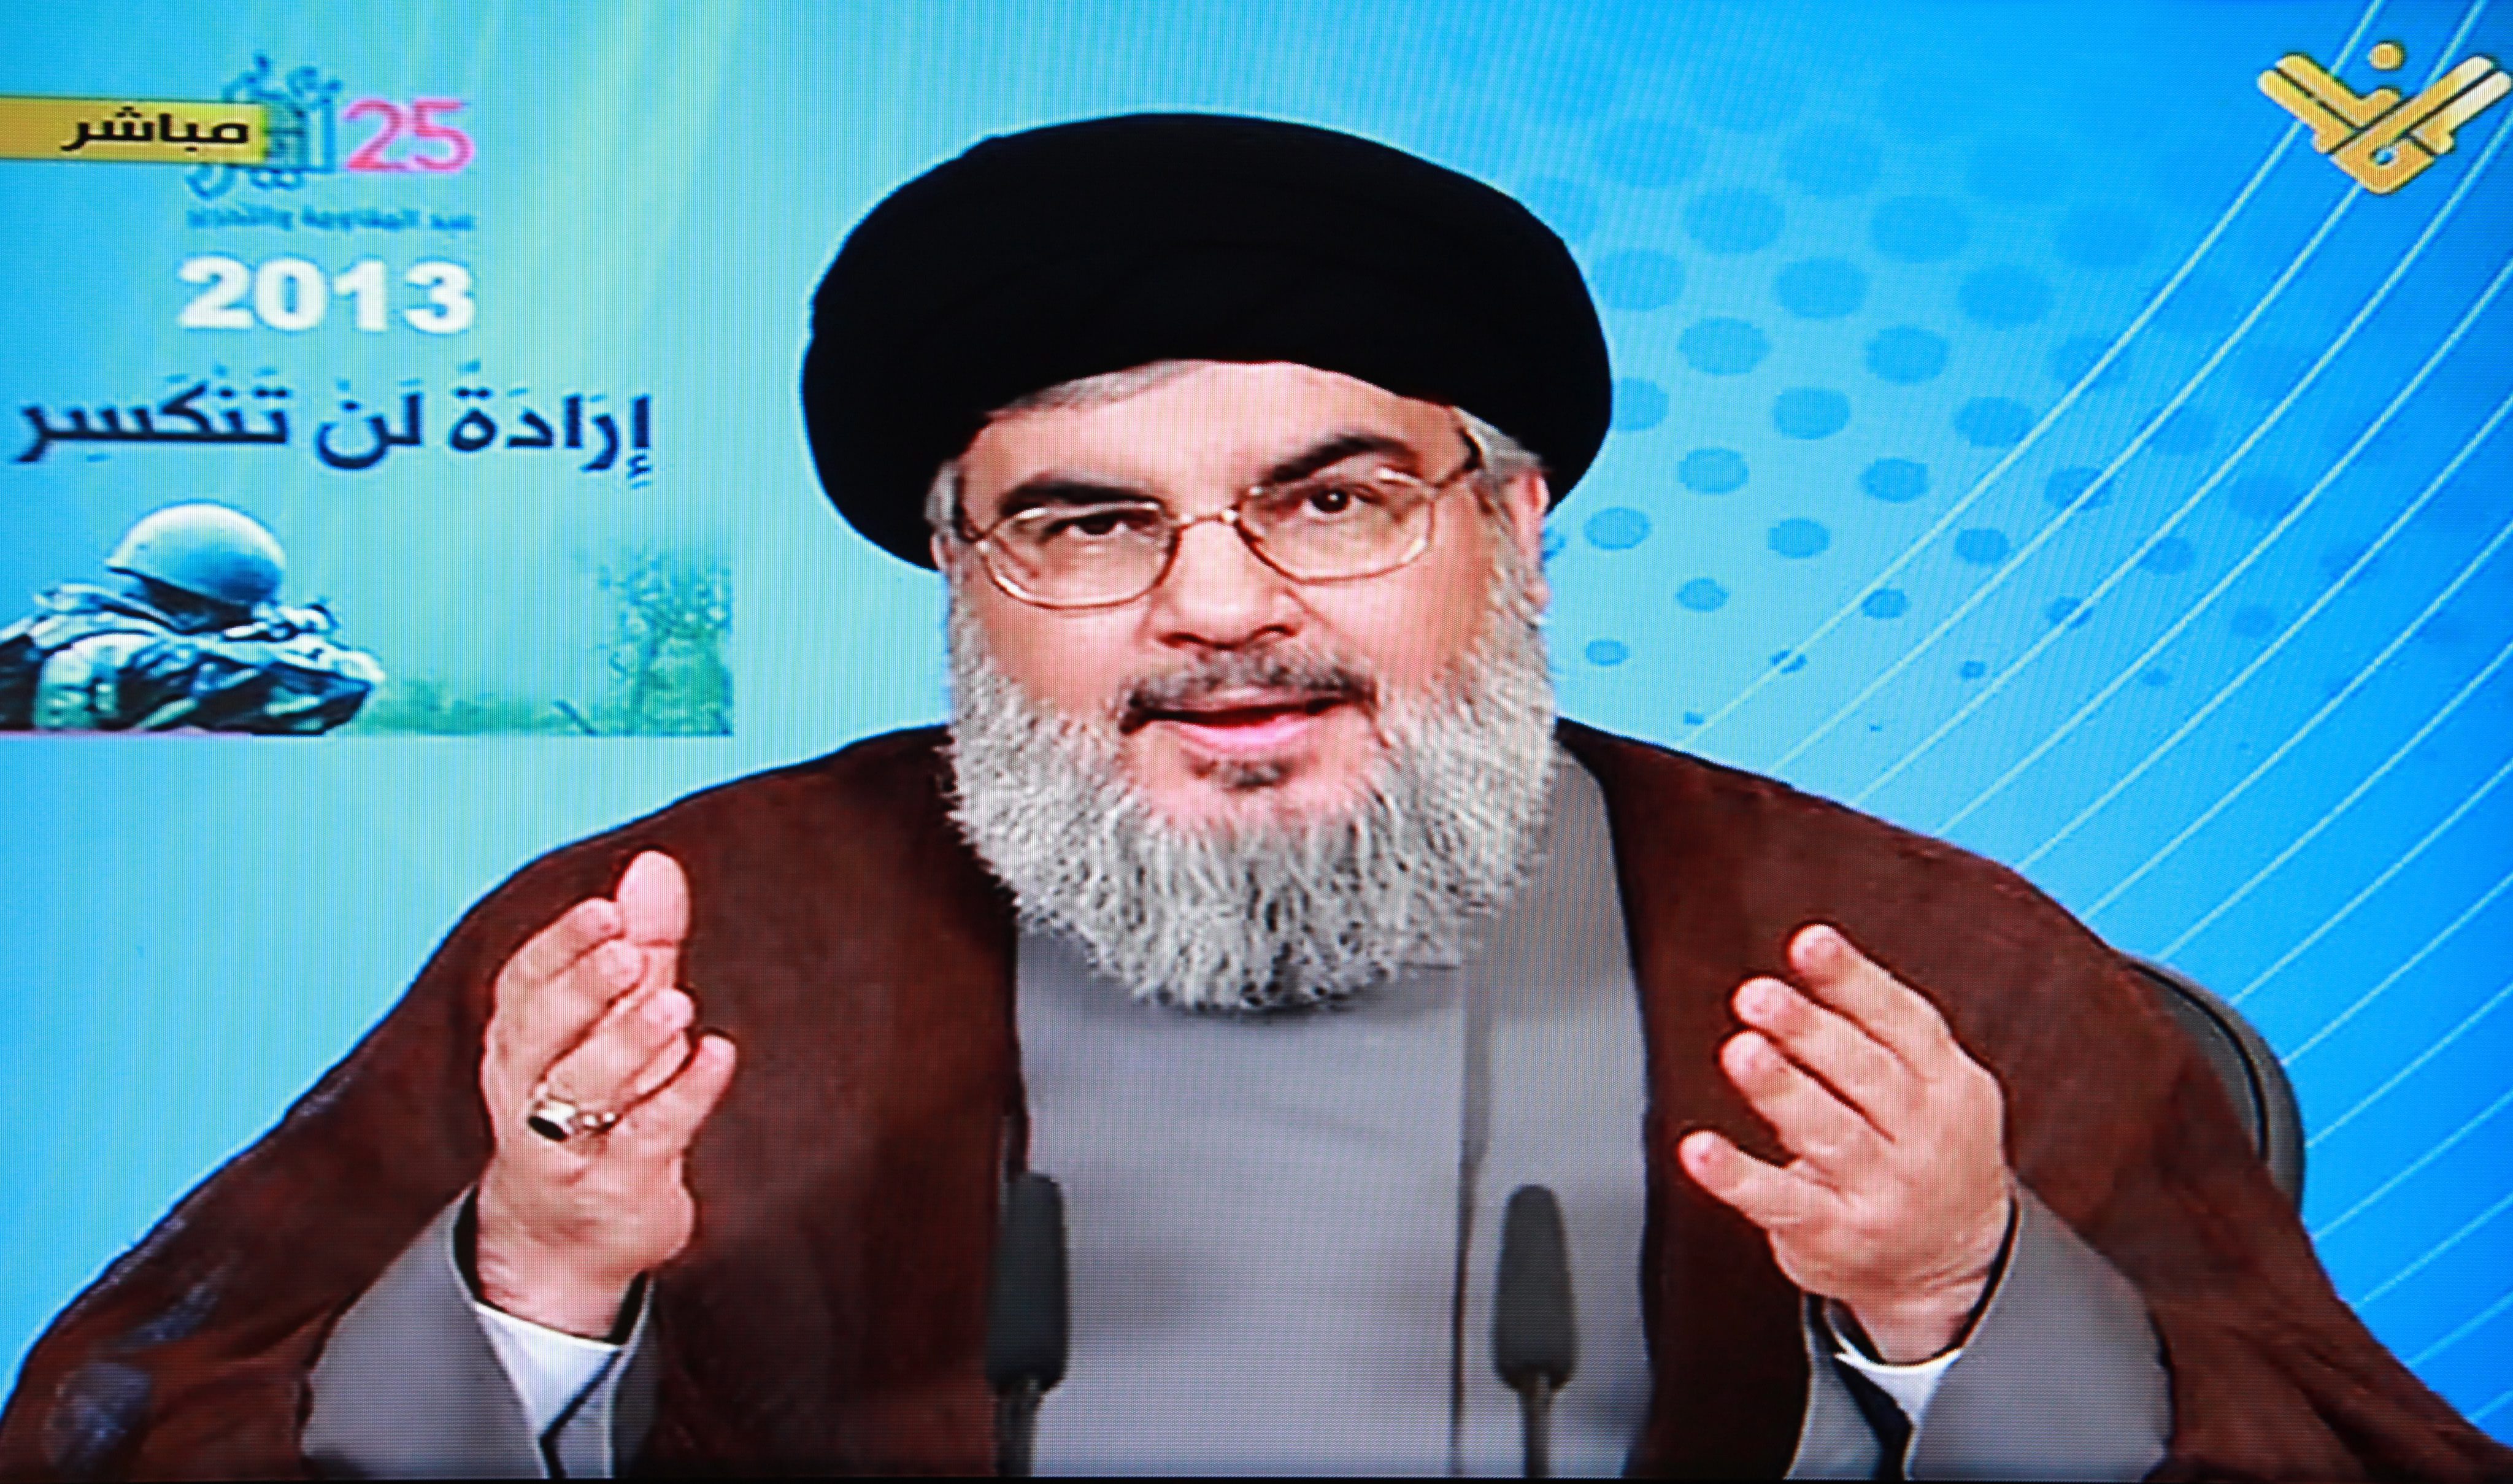 A TV grab from Al-Manar television shows Hezbollah Secretary-General Sayyed Hassan Nasrallah. Photo: EPA